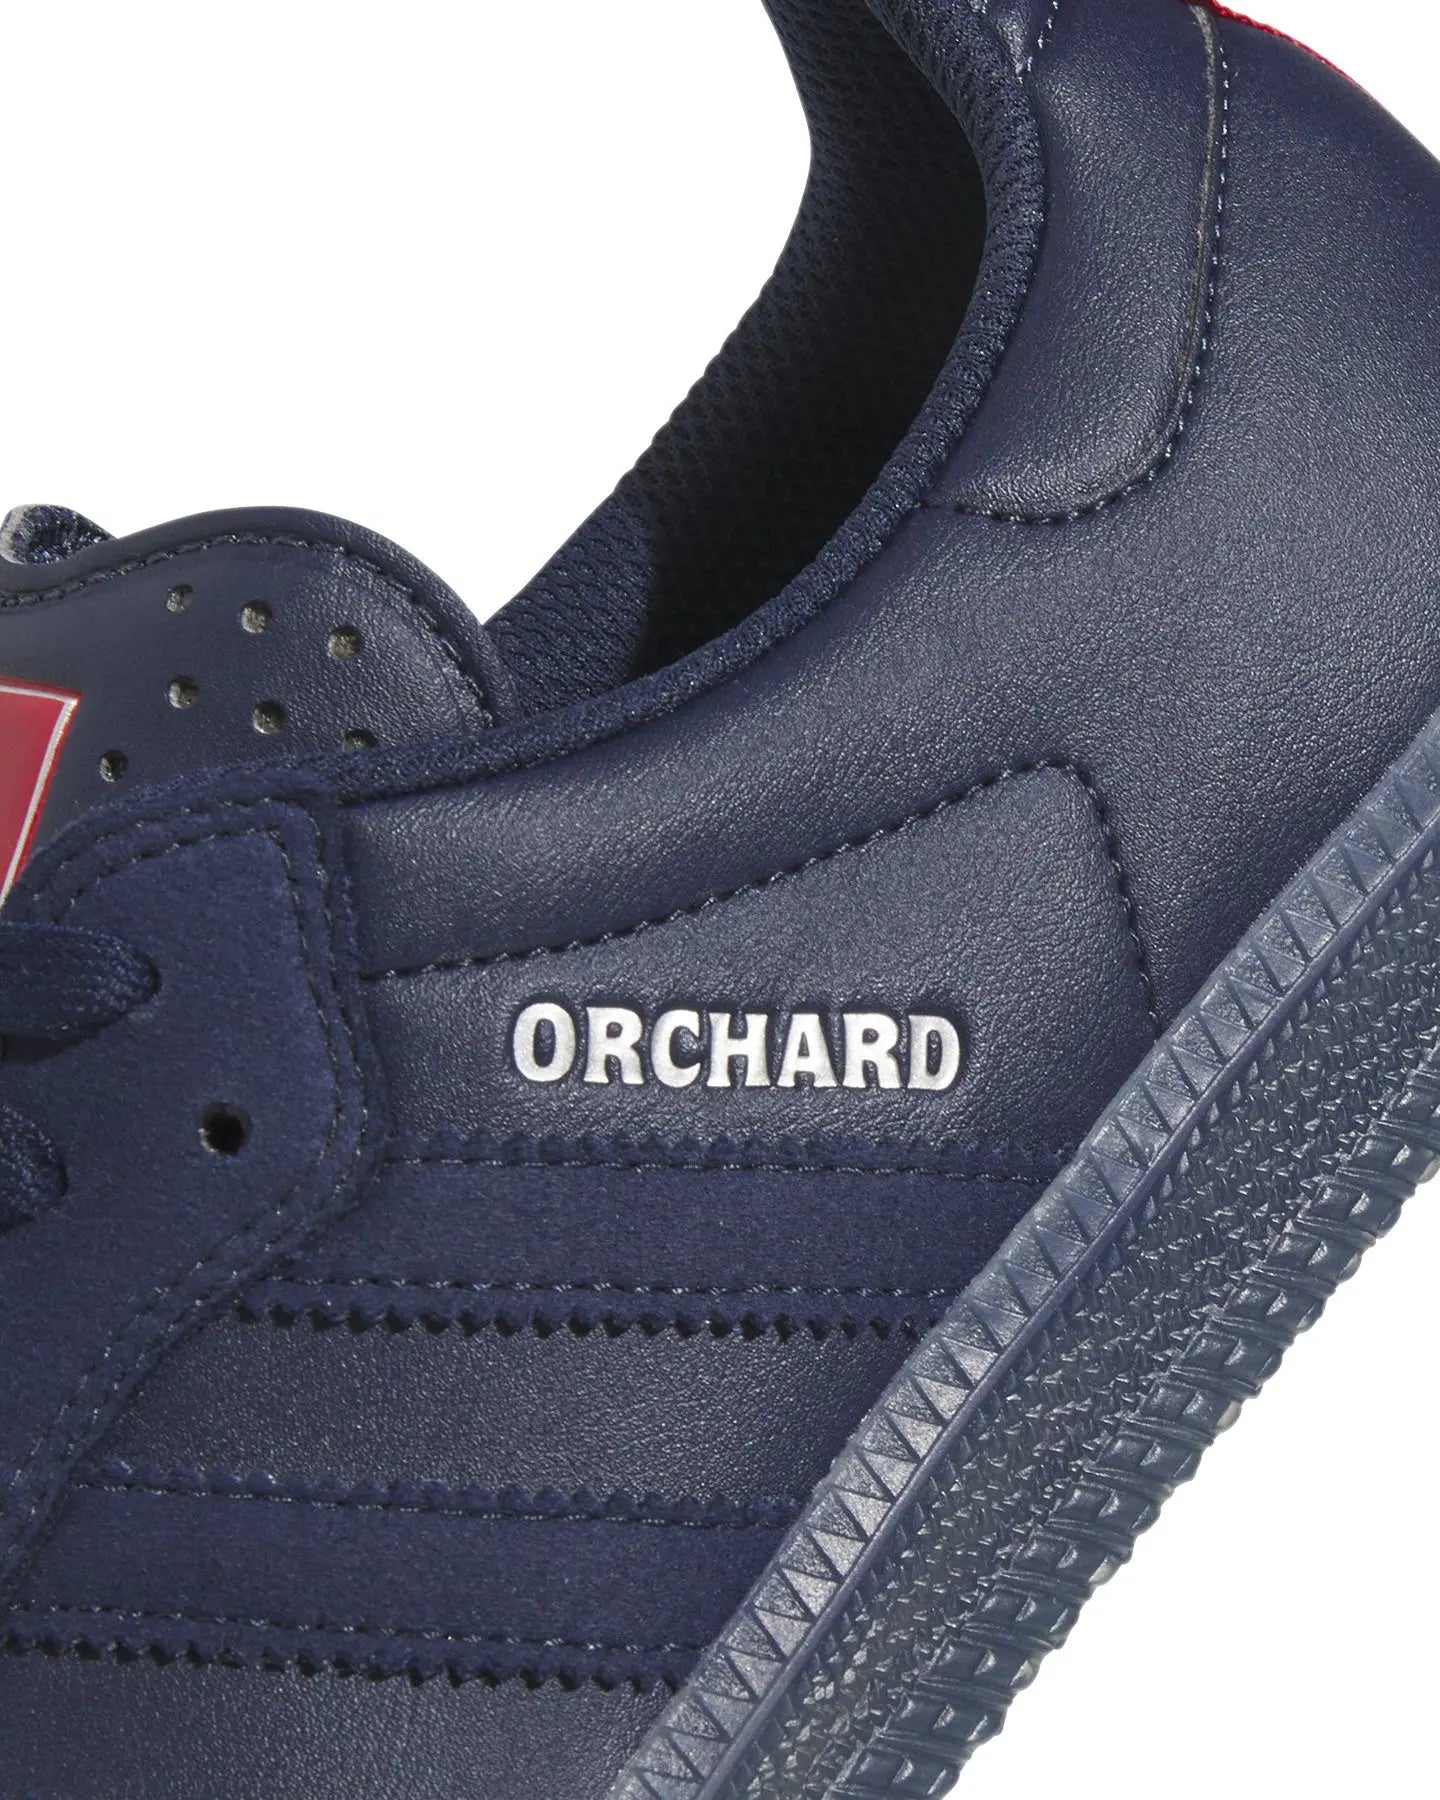 Adidas x Orchard x New England Revolution Samba ADV Footwear